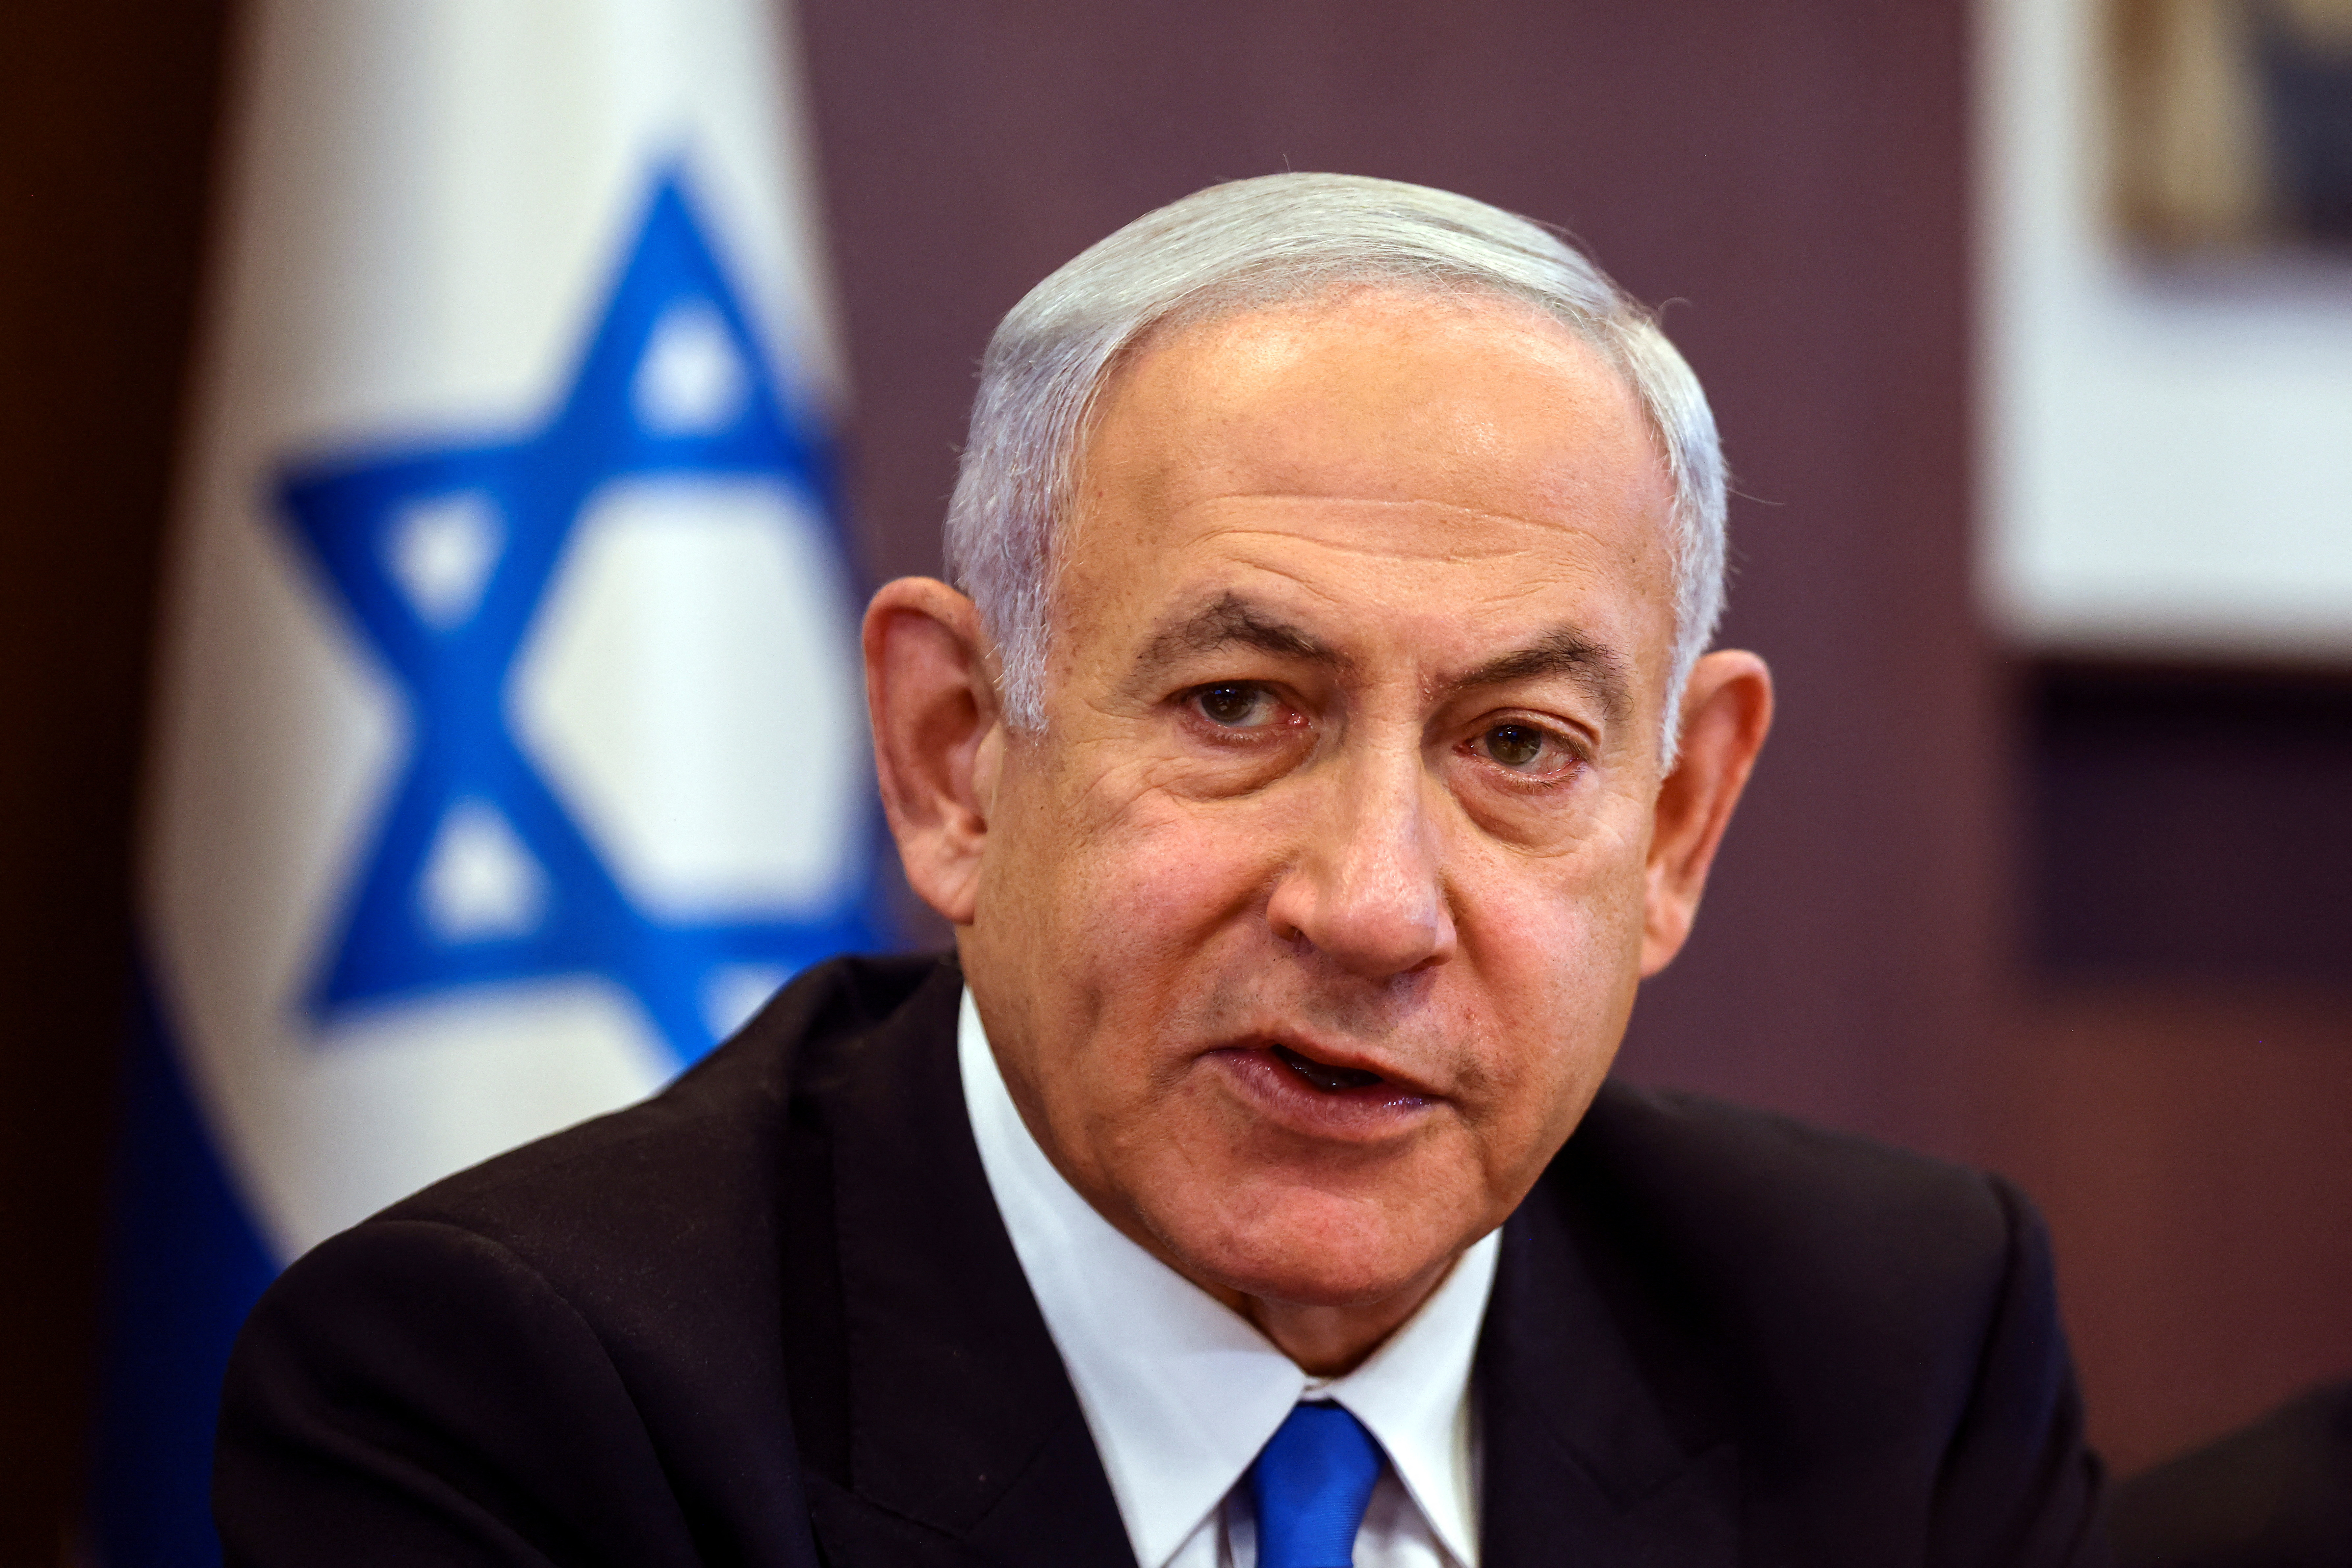 Israeli Prime Minister Benjamin Netanyahu leads a cabinet meeting in Jerusalem